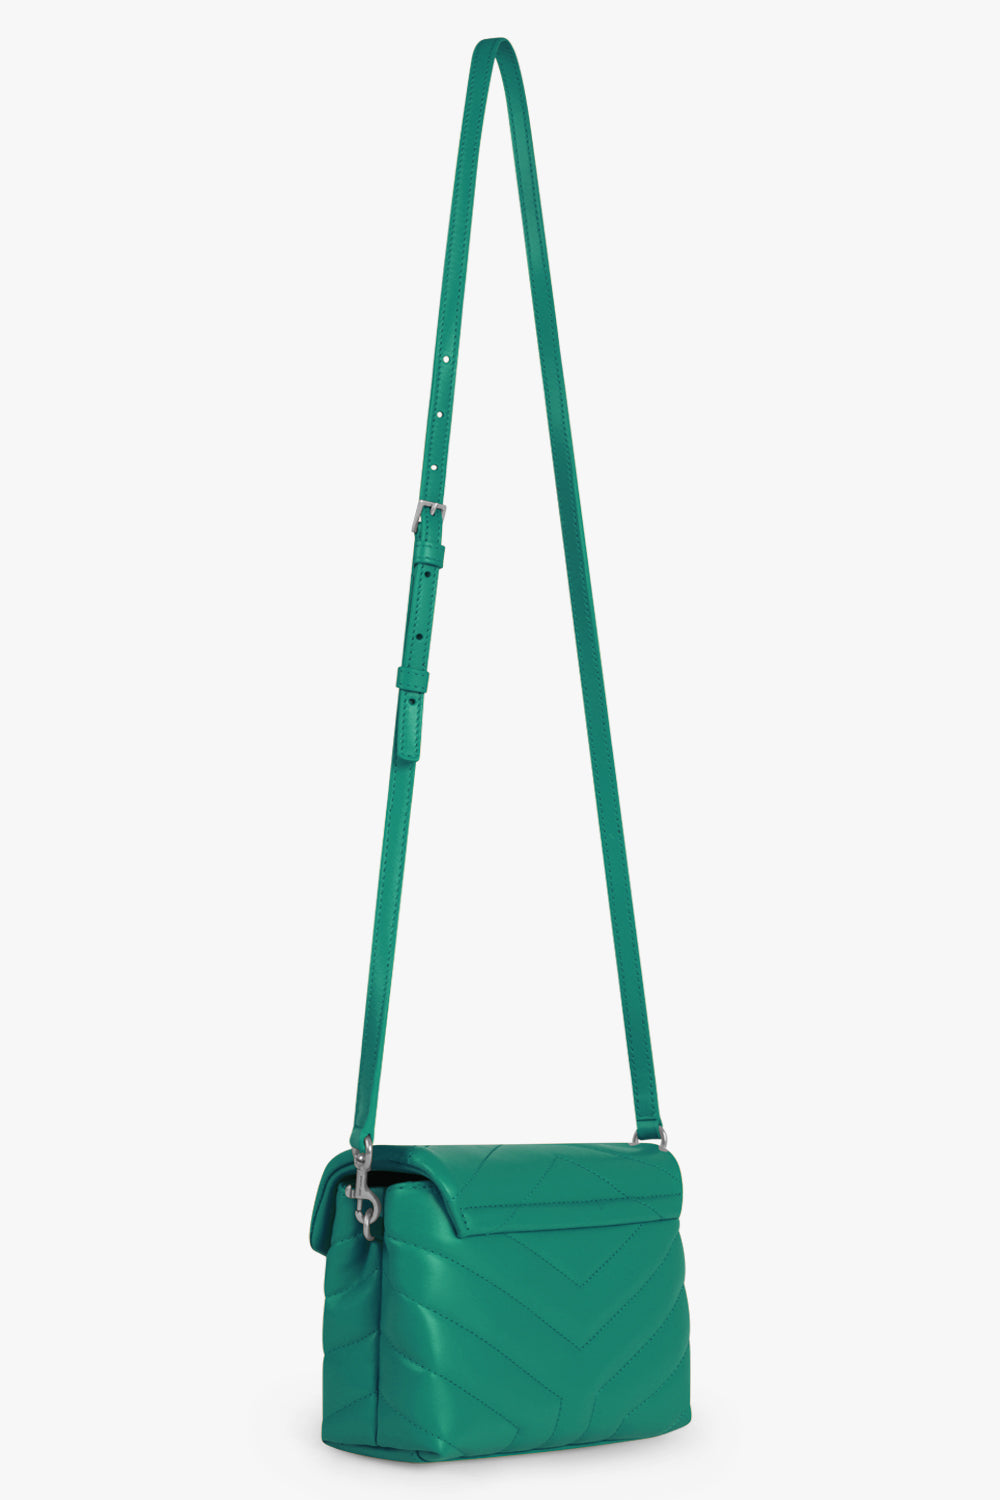 SAINT LAURENT BAGS MULTI LOULOU TOY FLAP BAG ADJUSTABLE STRAP | GREEN FIELD/SILVER